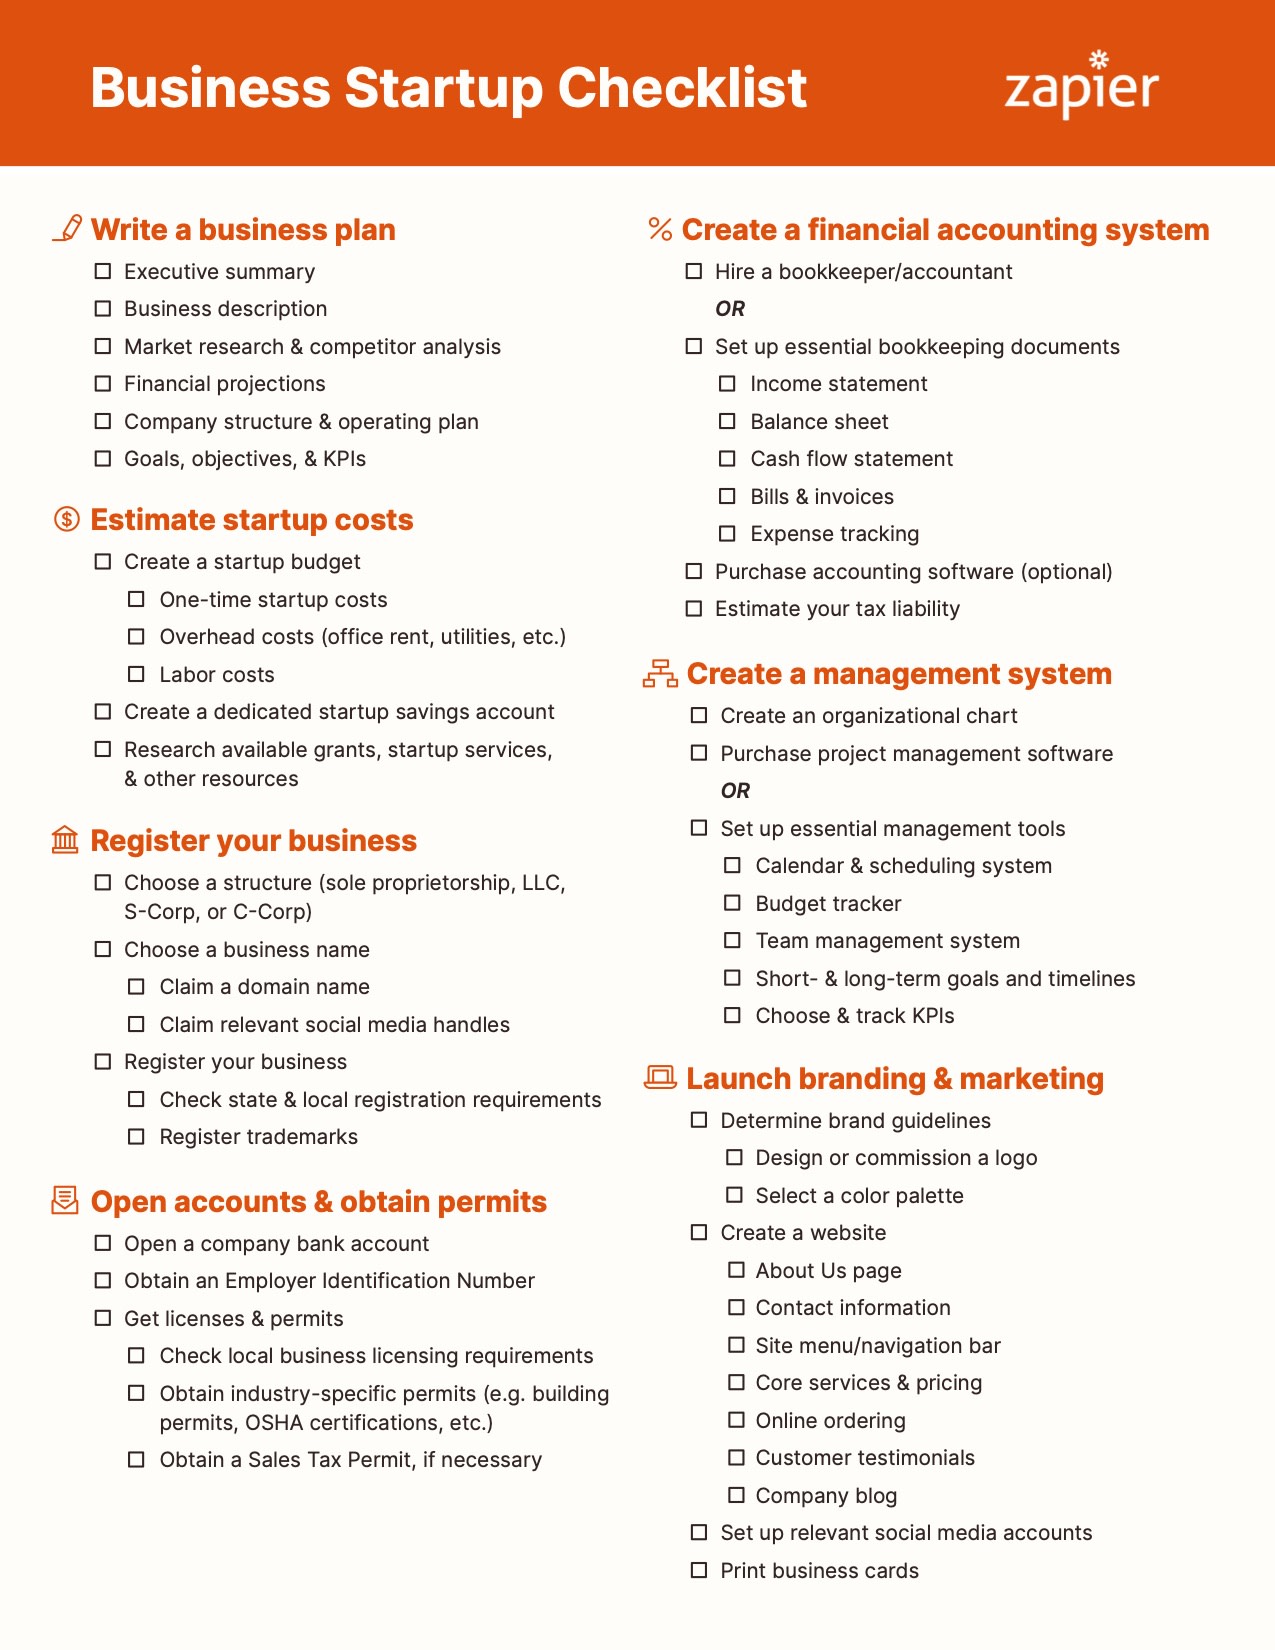 Image of Zapier's business startup checklist